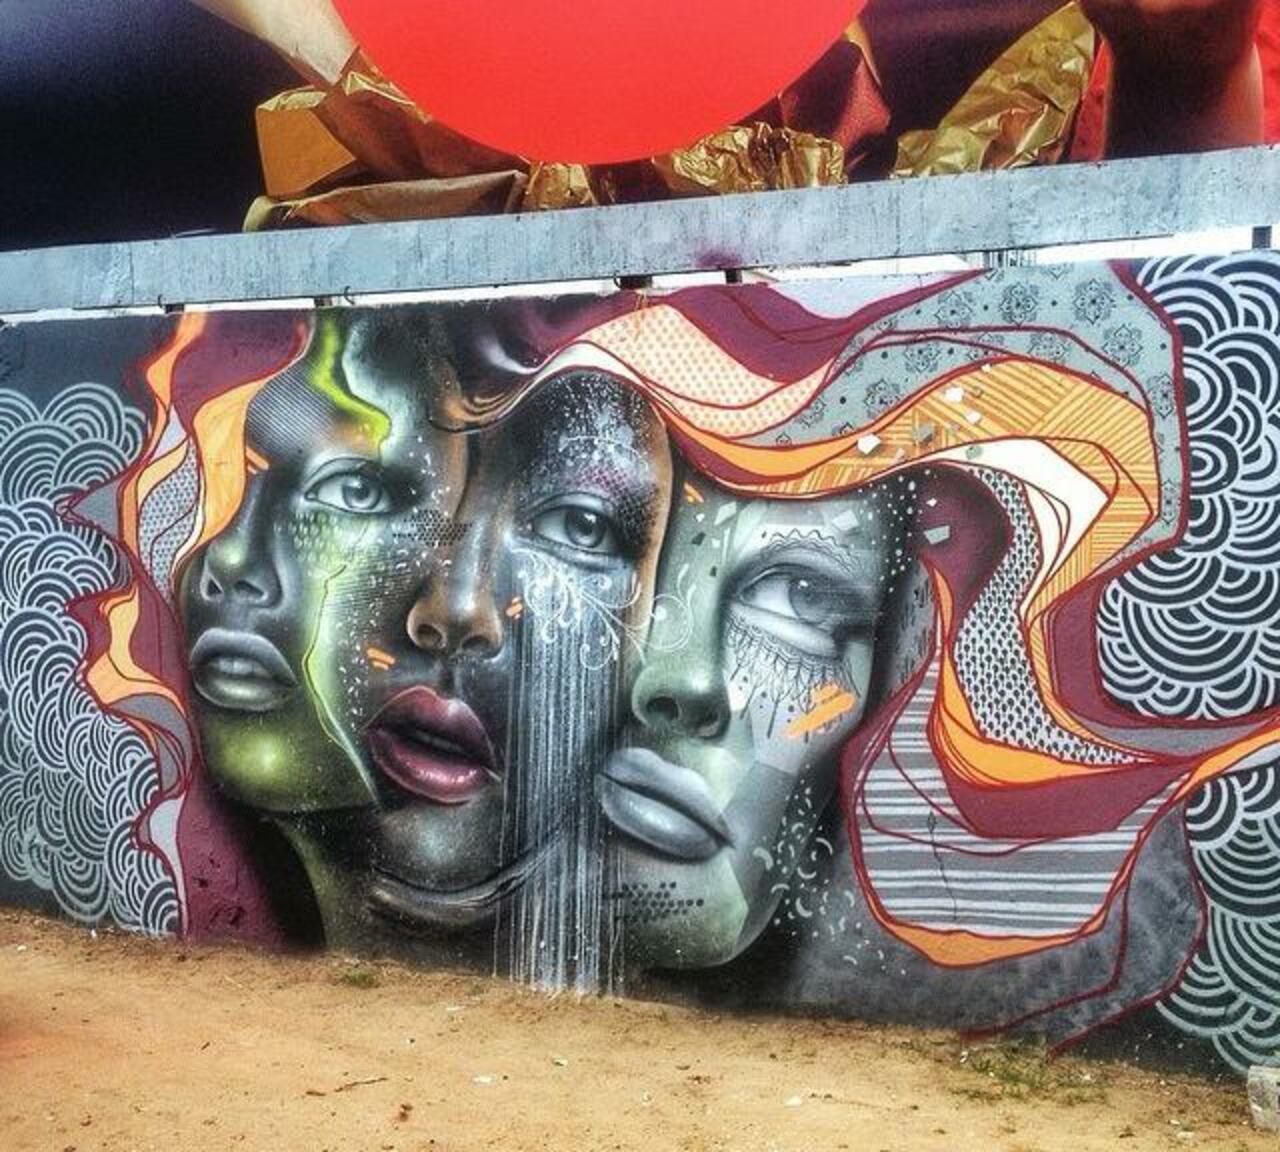 Amazing Street Art by AQI Luciano in Maceió, Brazil 

#art #arte #graffiti #streetart http://t.co/8cfqQ3sDVp